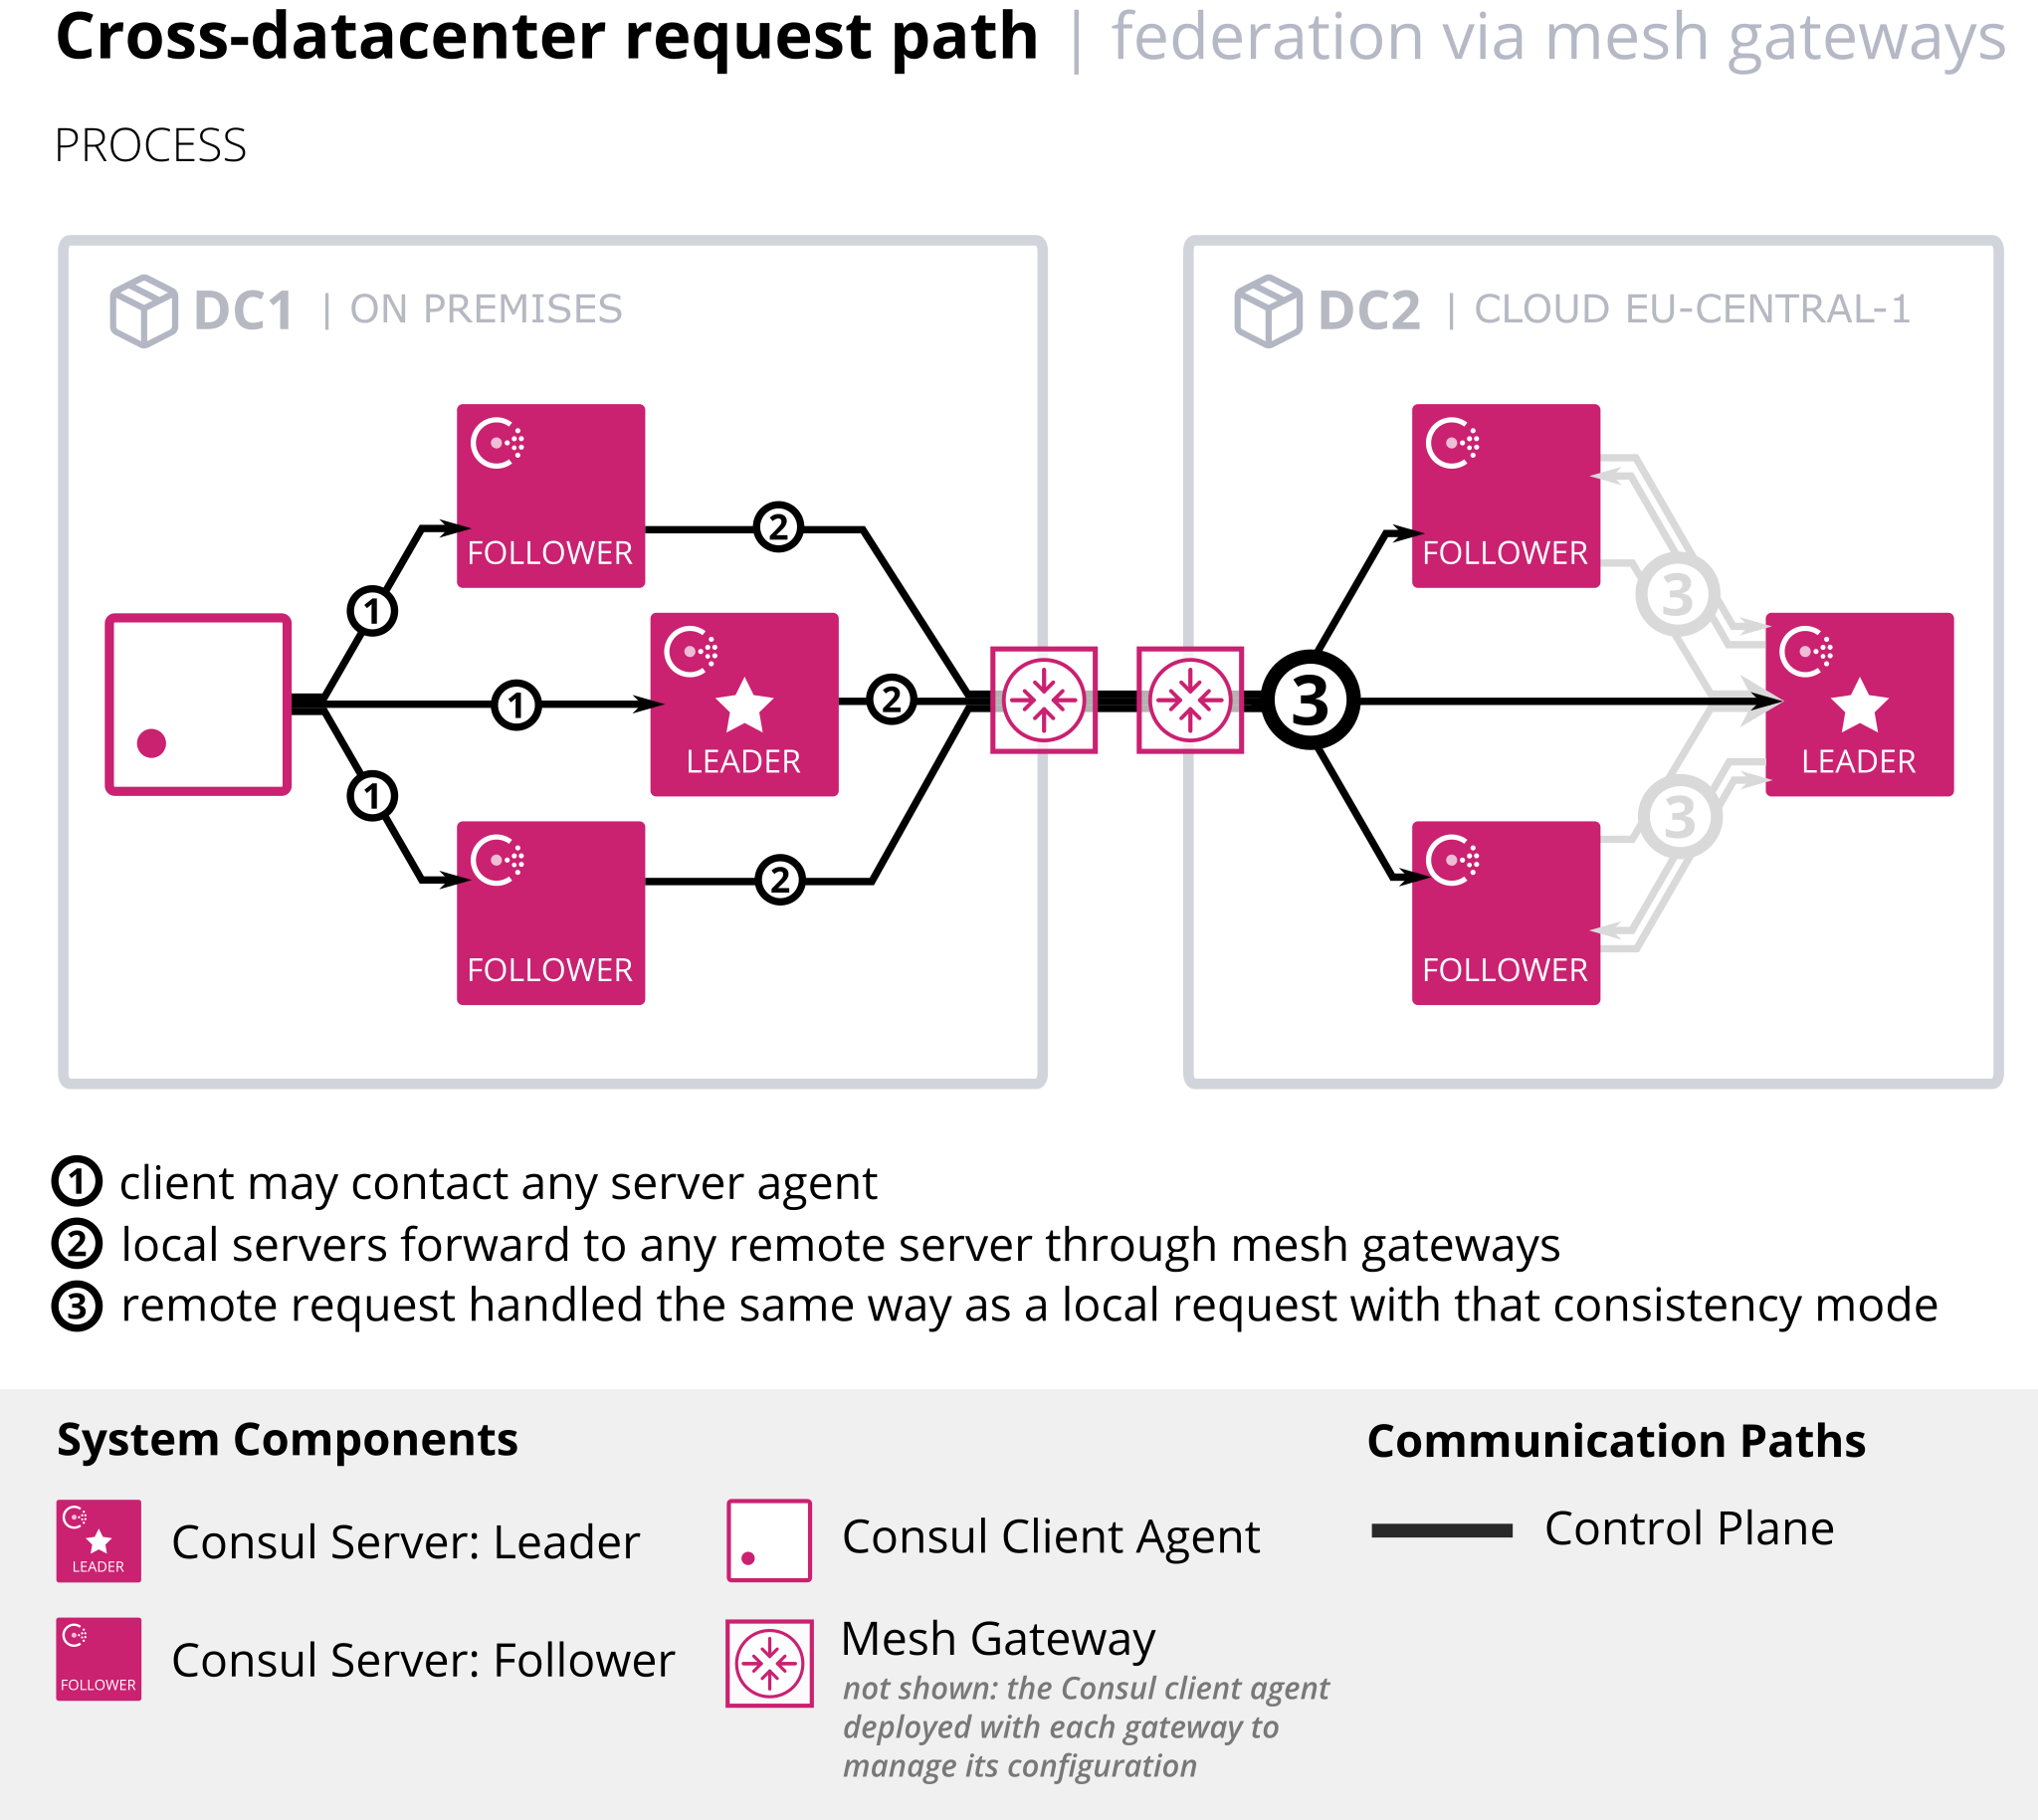 consistency mode behavior across Consul datacenters with WAN federation via mesh gateways